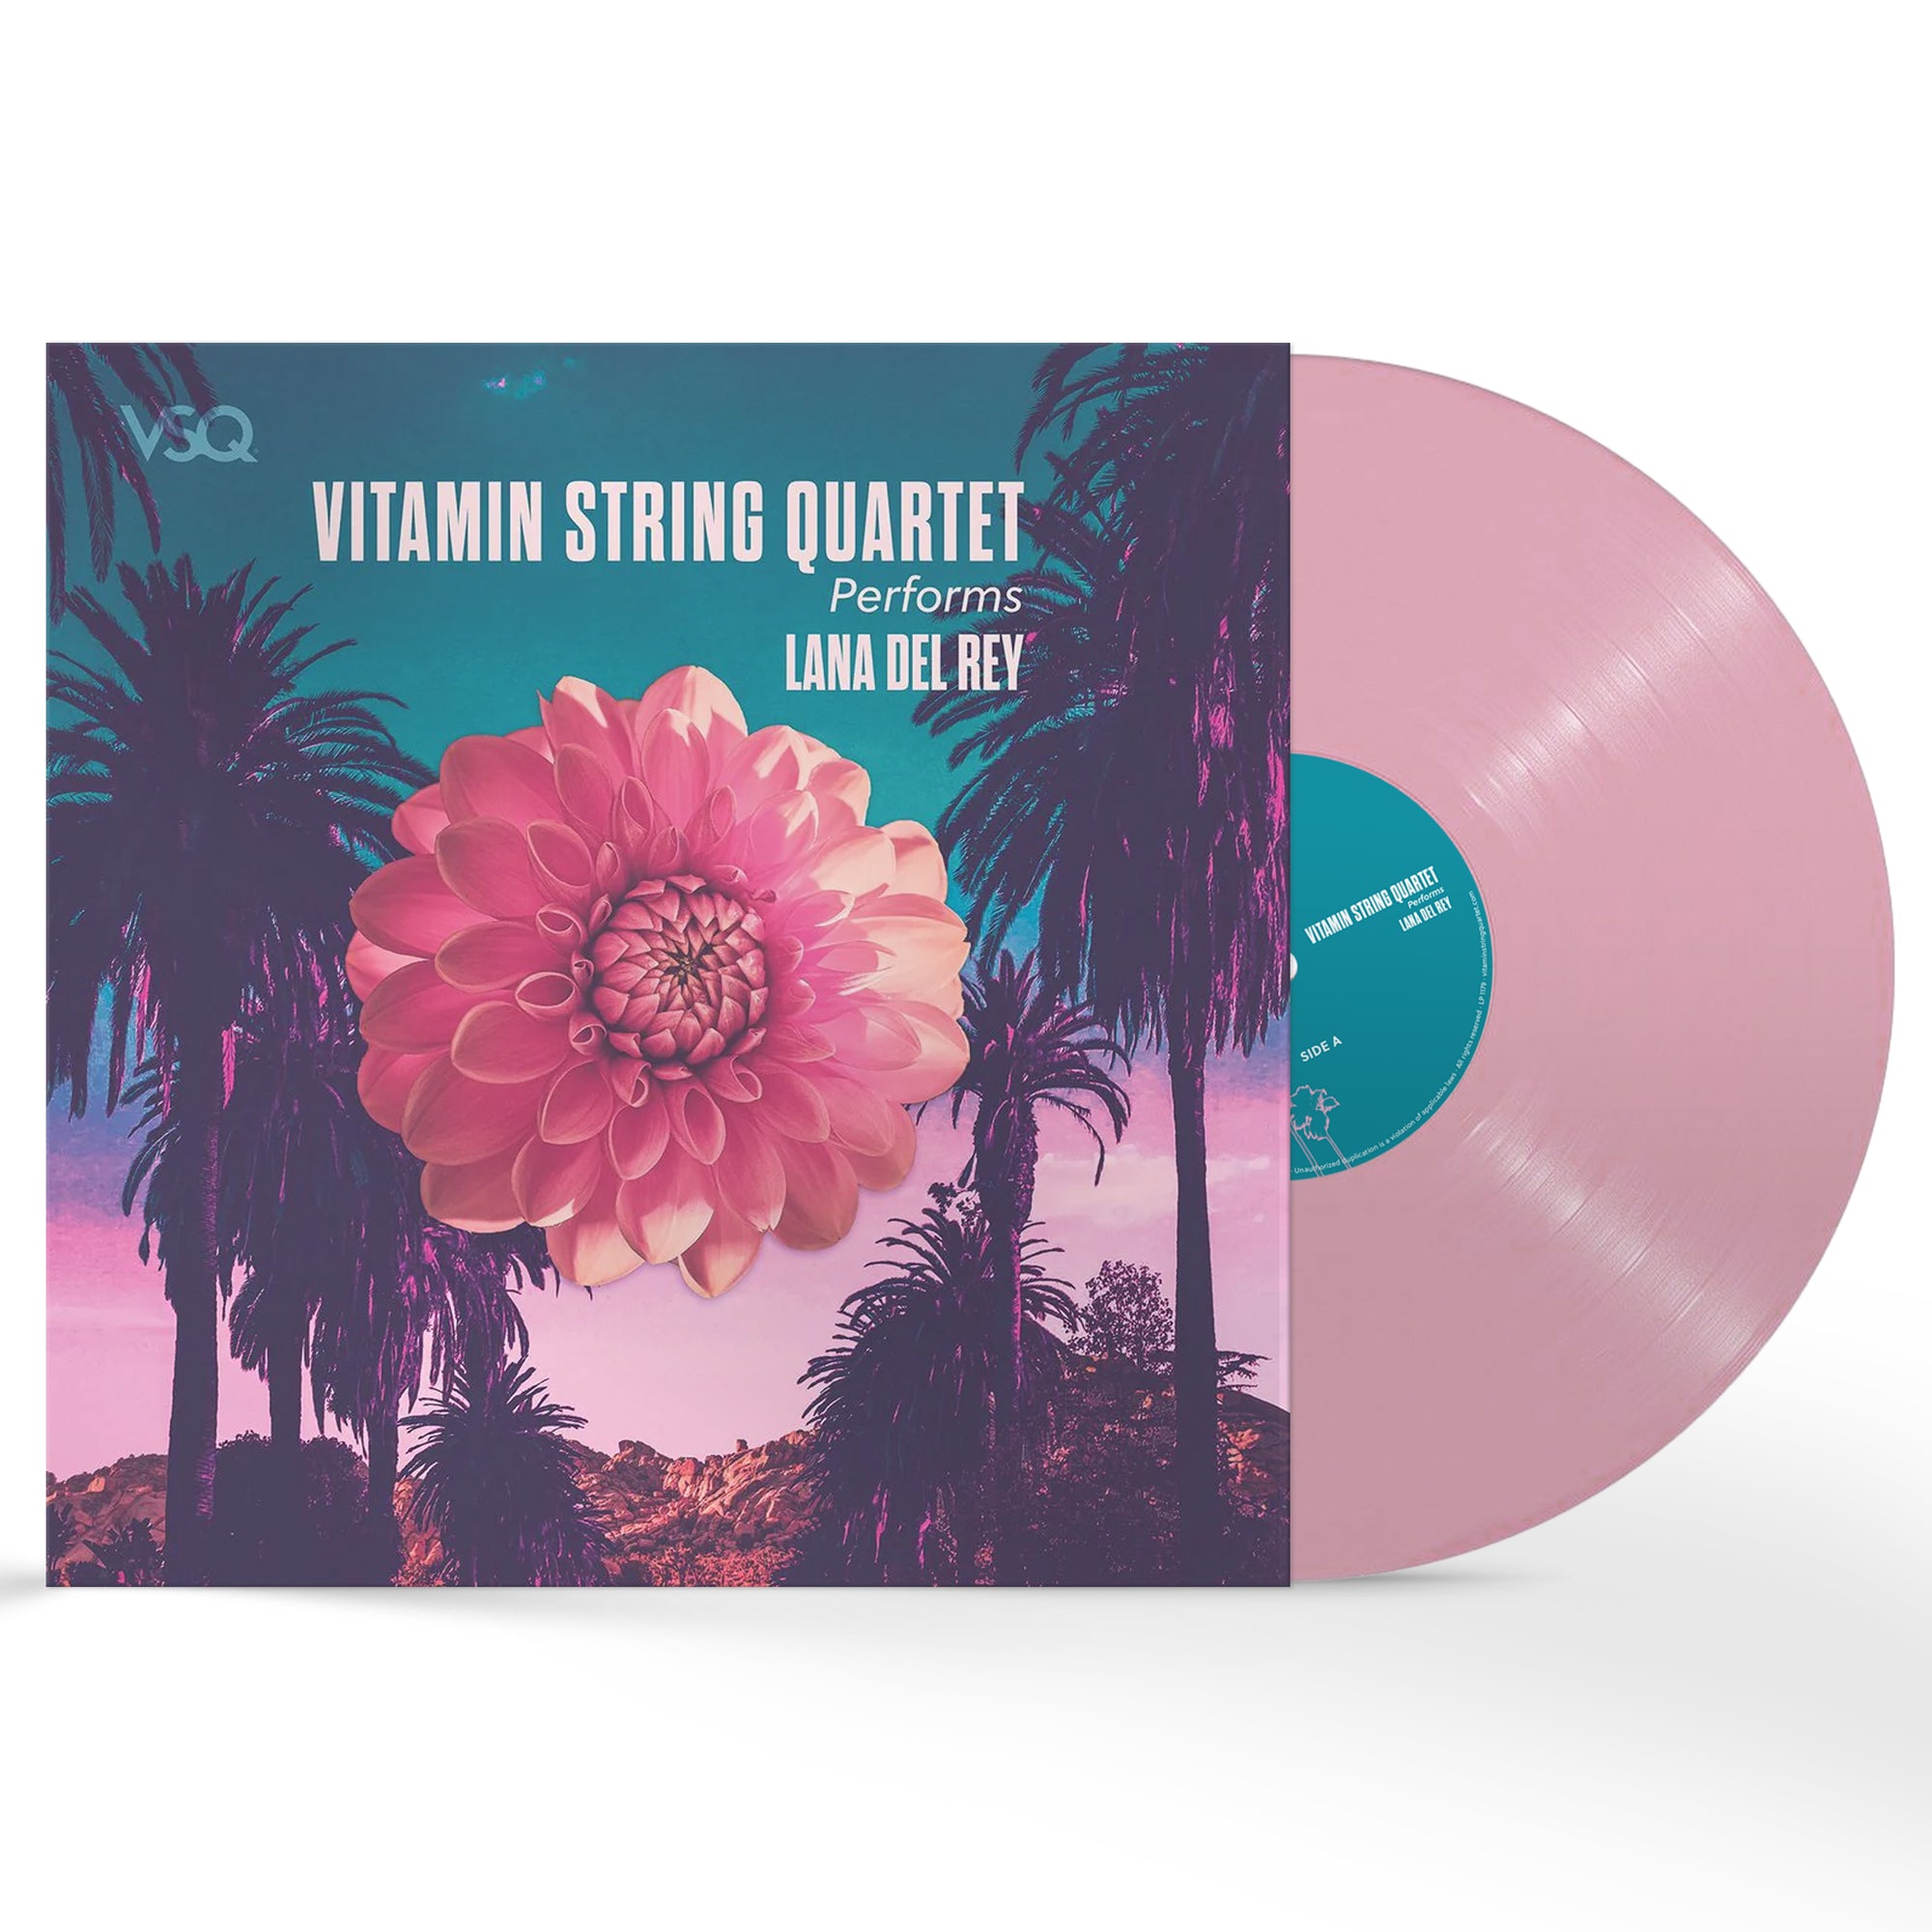 Floral Album Art for Vitamin String Quartet's Lana Del Rey Covers